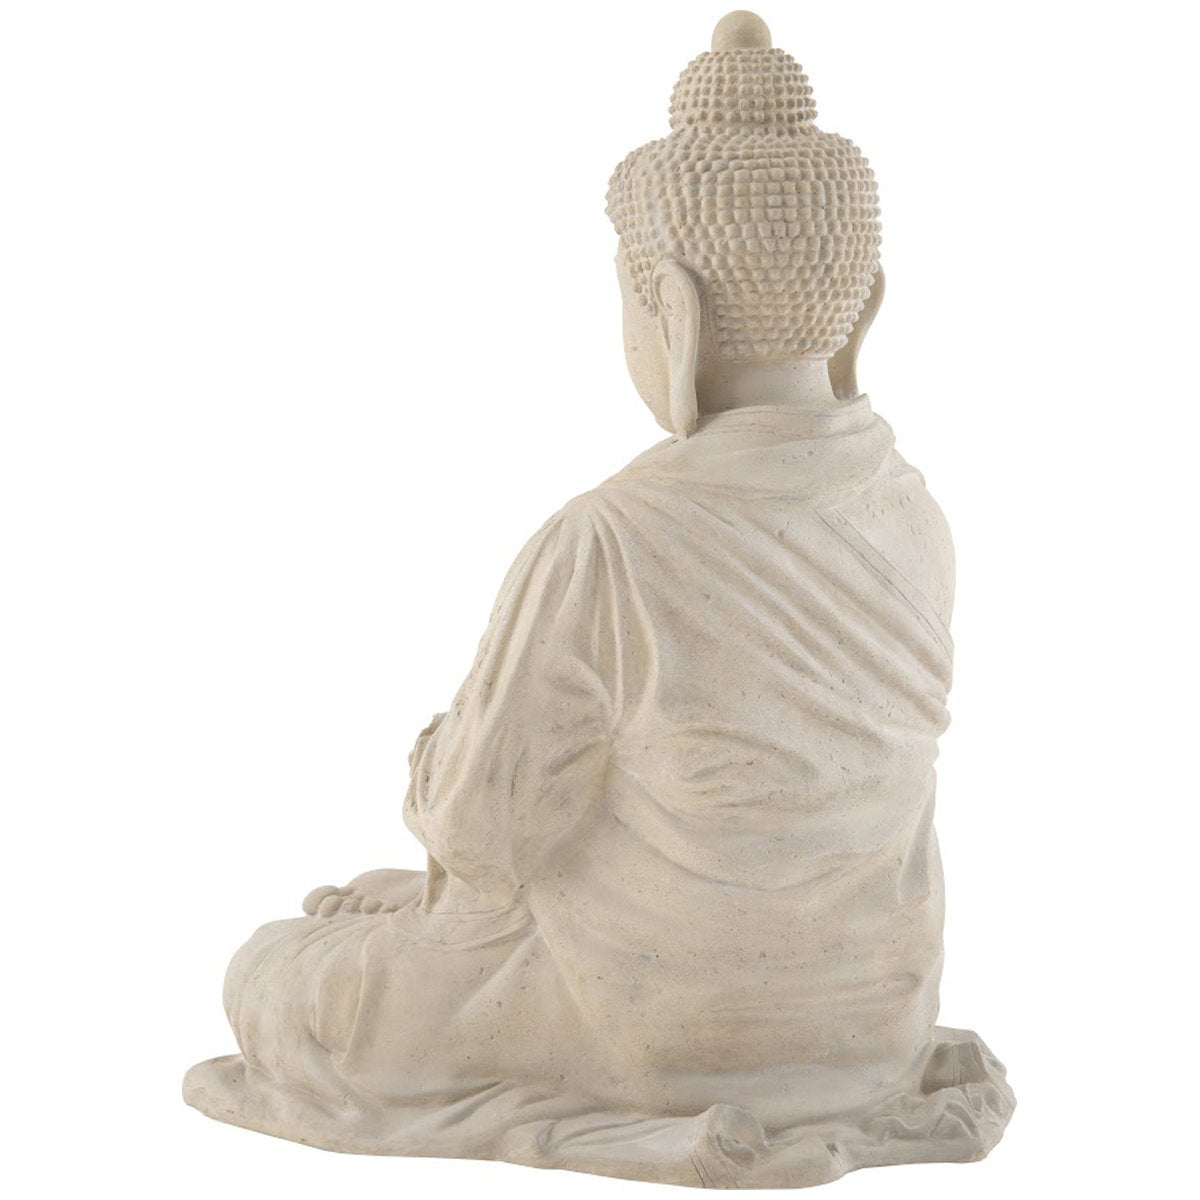 Phillips Collection Enchanting Buddha Sculpture, Roman Stone